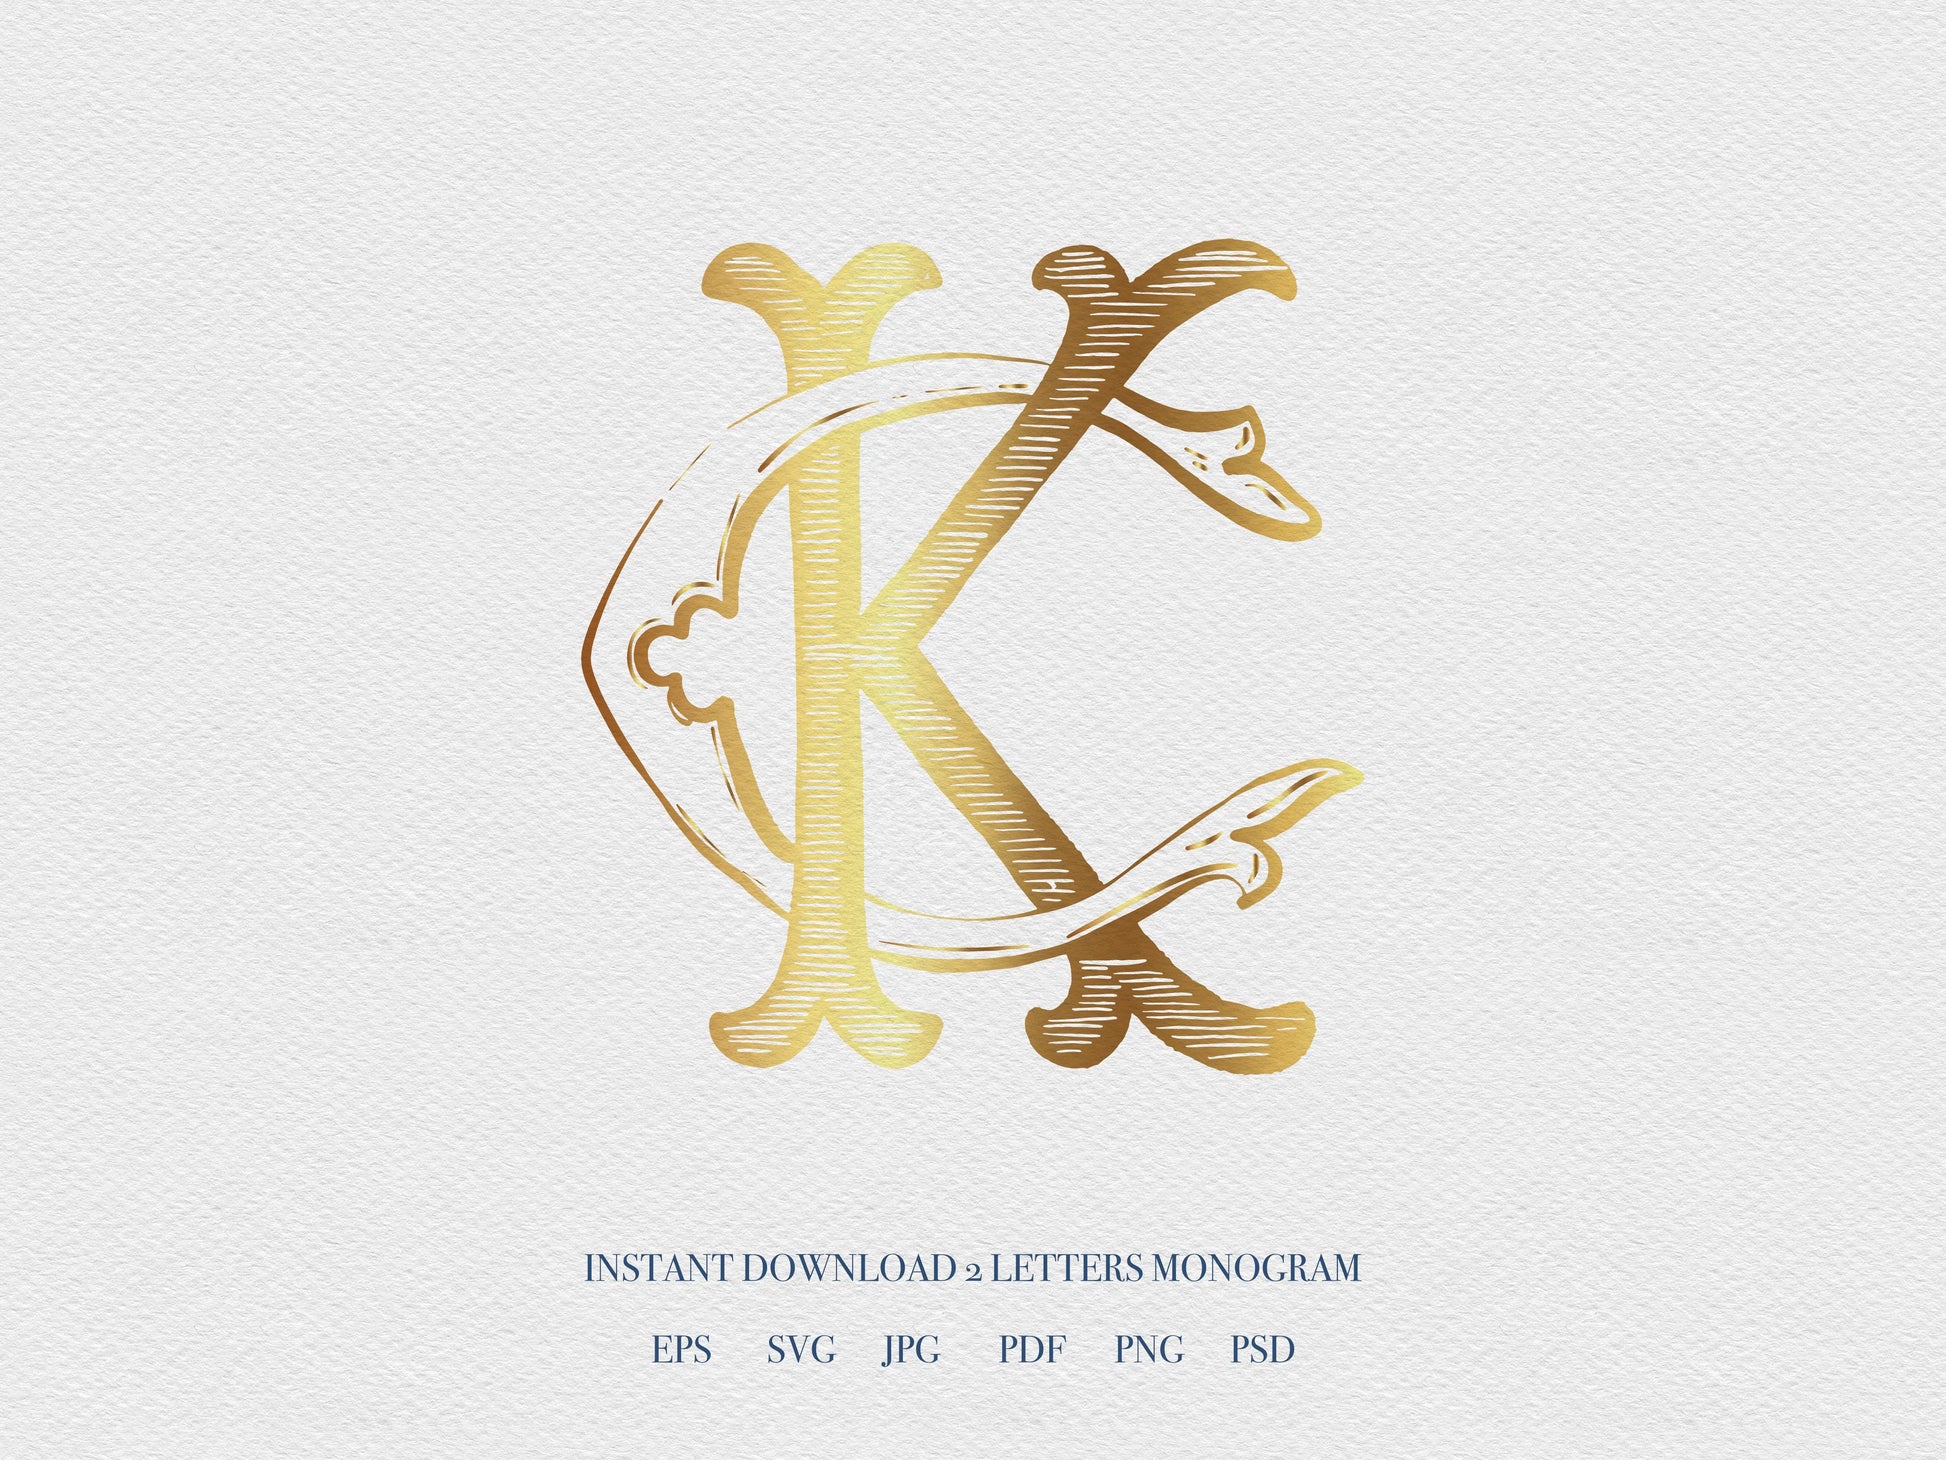 2 Letter Monogram with Letters KC | Digital Download - Wedding Monogram SVG, Personal Logo, Wedding Logo for Wedding Invitations The Wedding Crest Lab